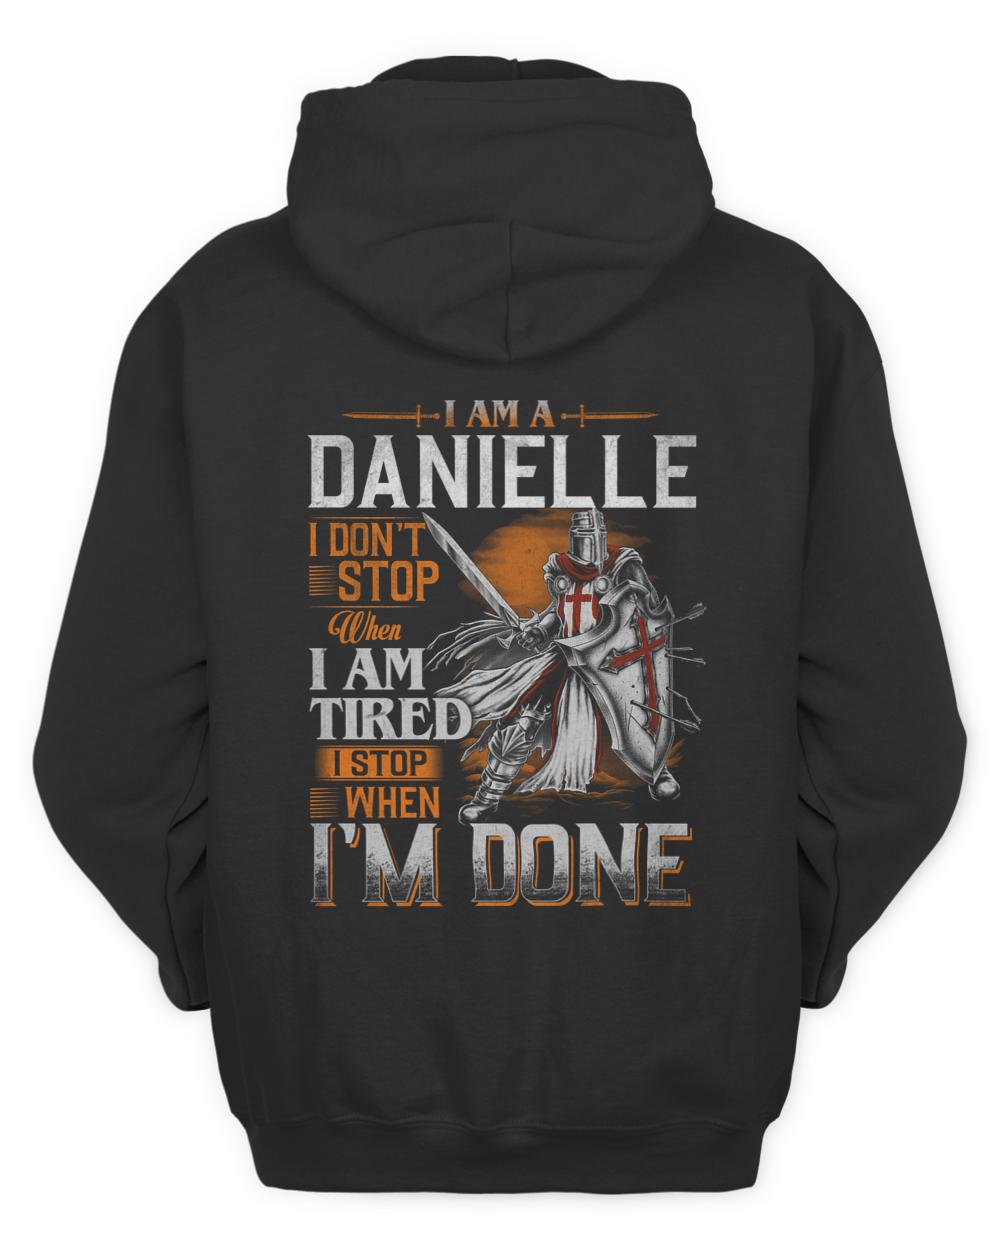 DANIELLE-13K-57-01